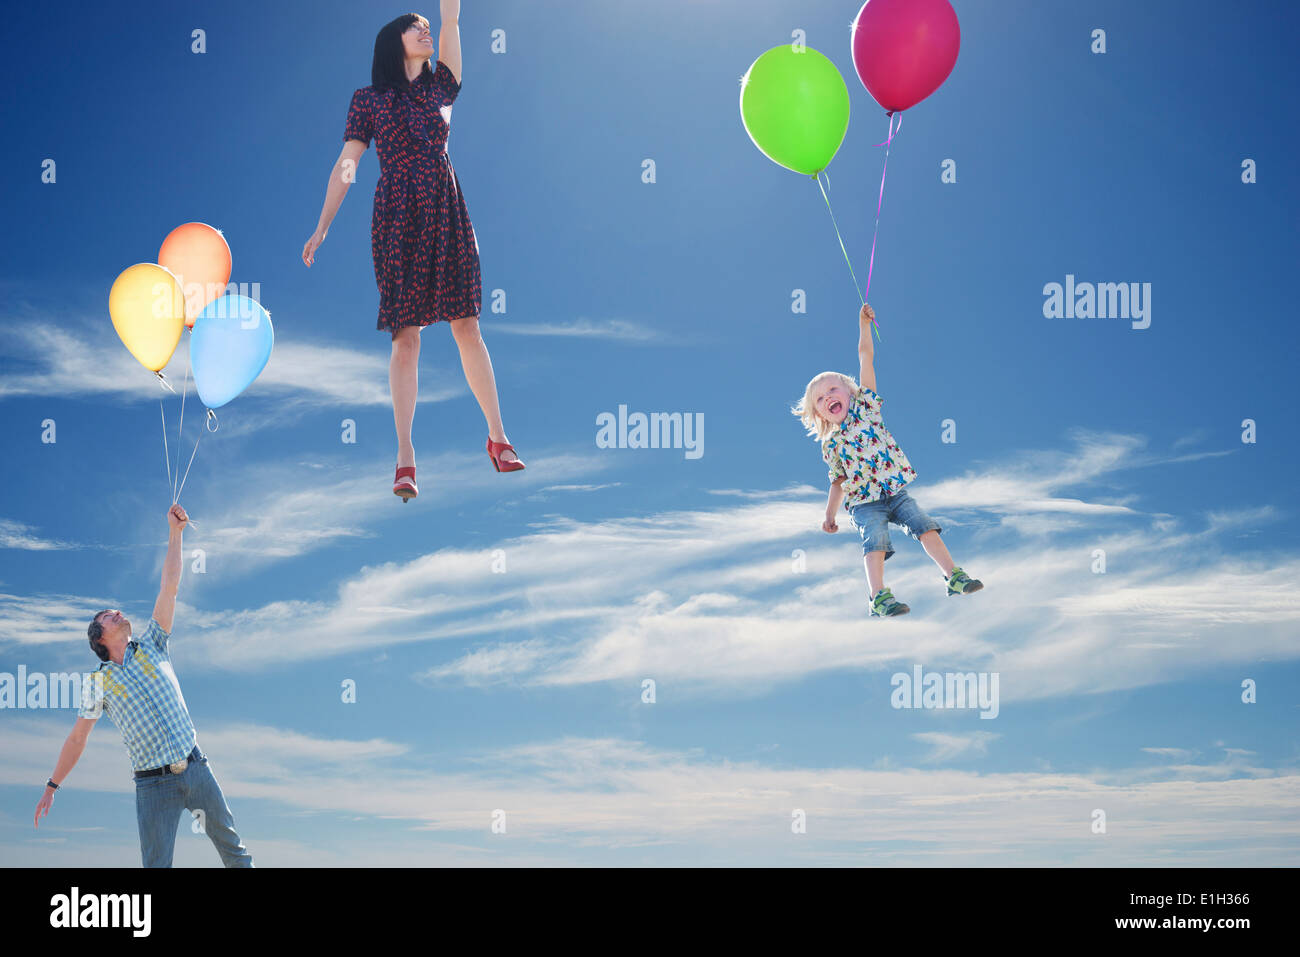 Älteres Paar und seinem kleinen Sohn himmelwärts festhalten an Ballons schweben Stockfoto